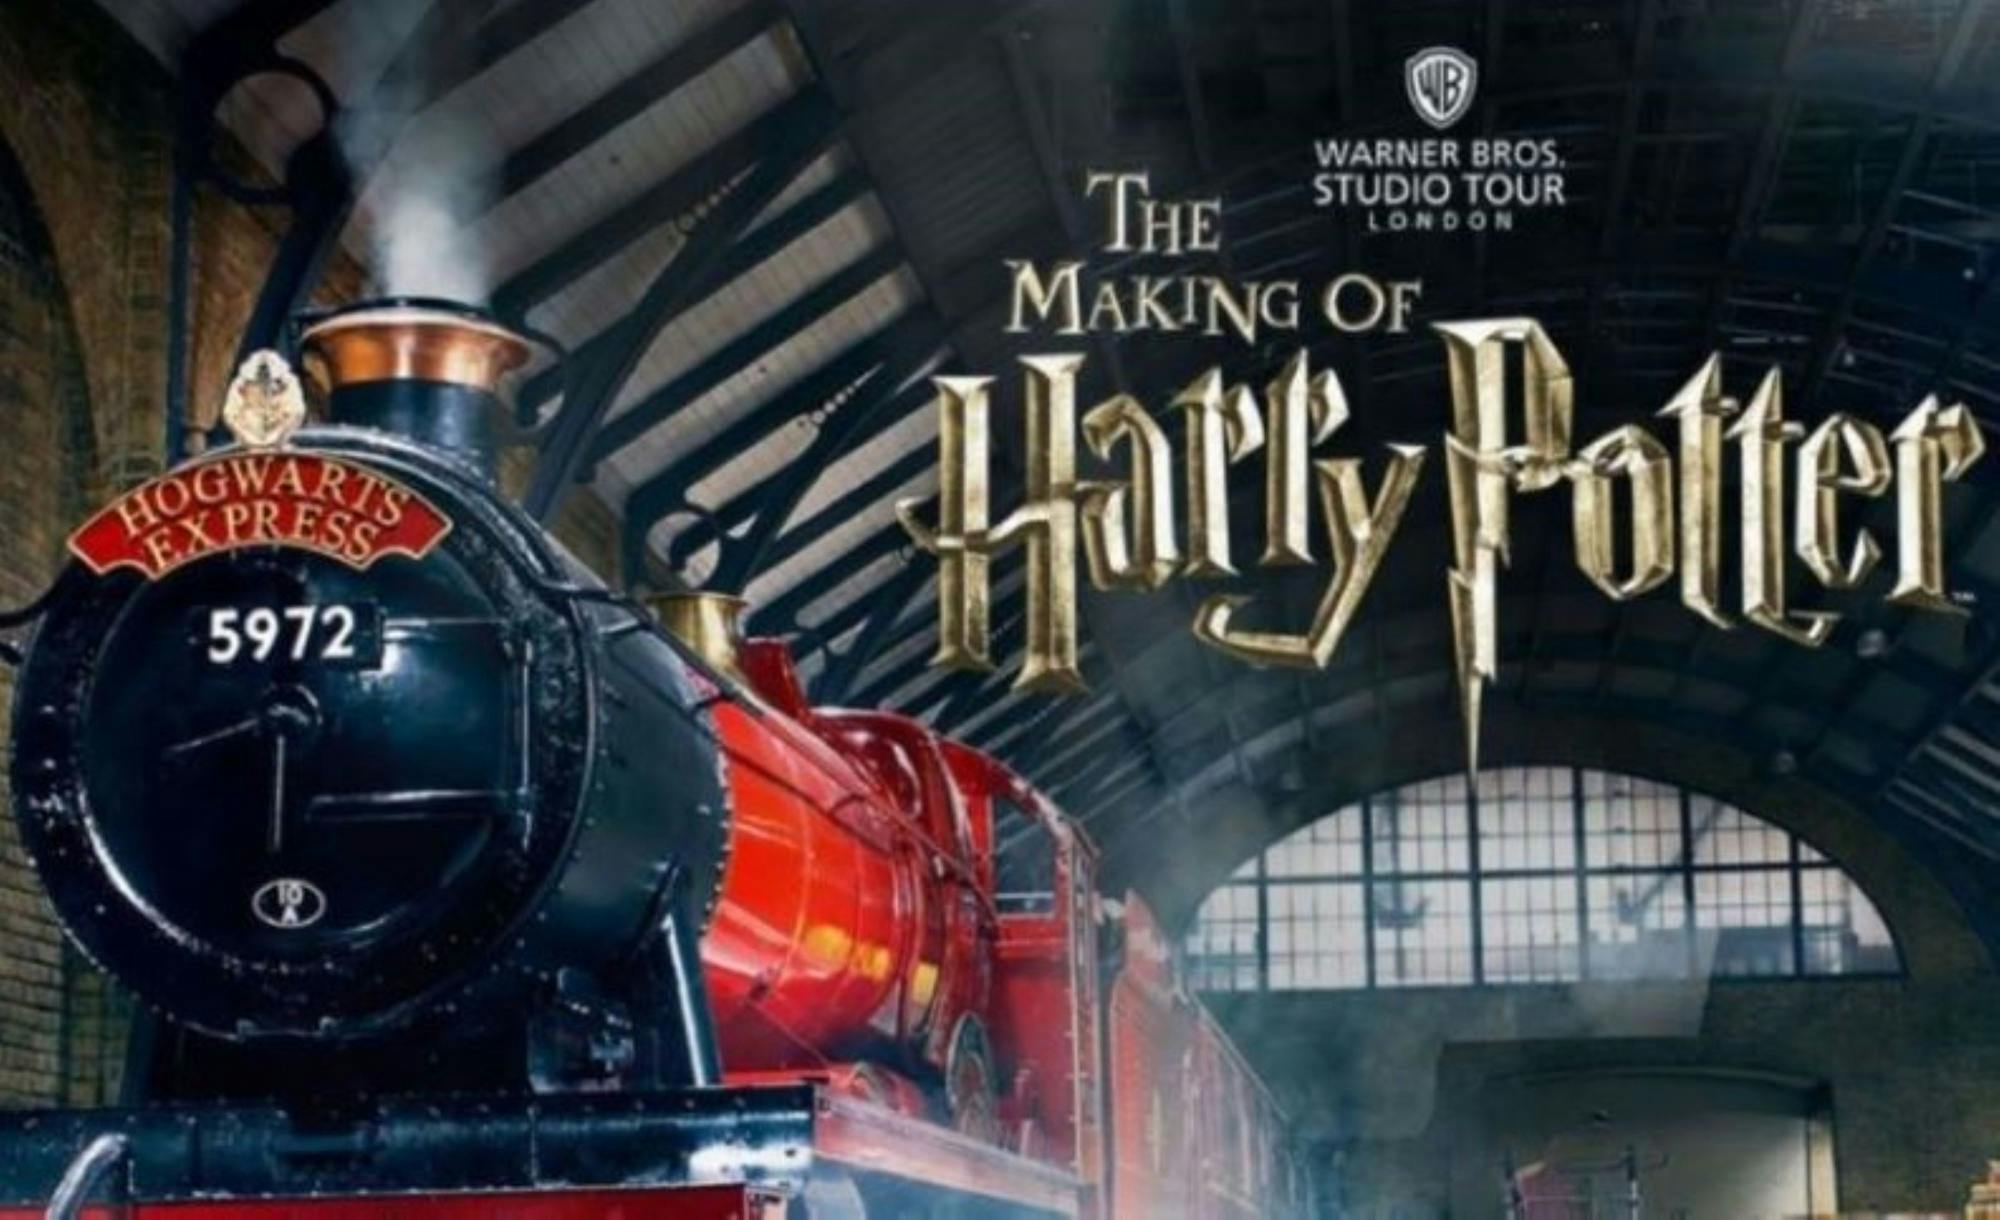 „The Making of Harry Potter“ ab Birmingham in der ersten Klasse